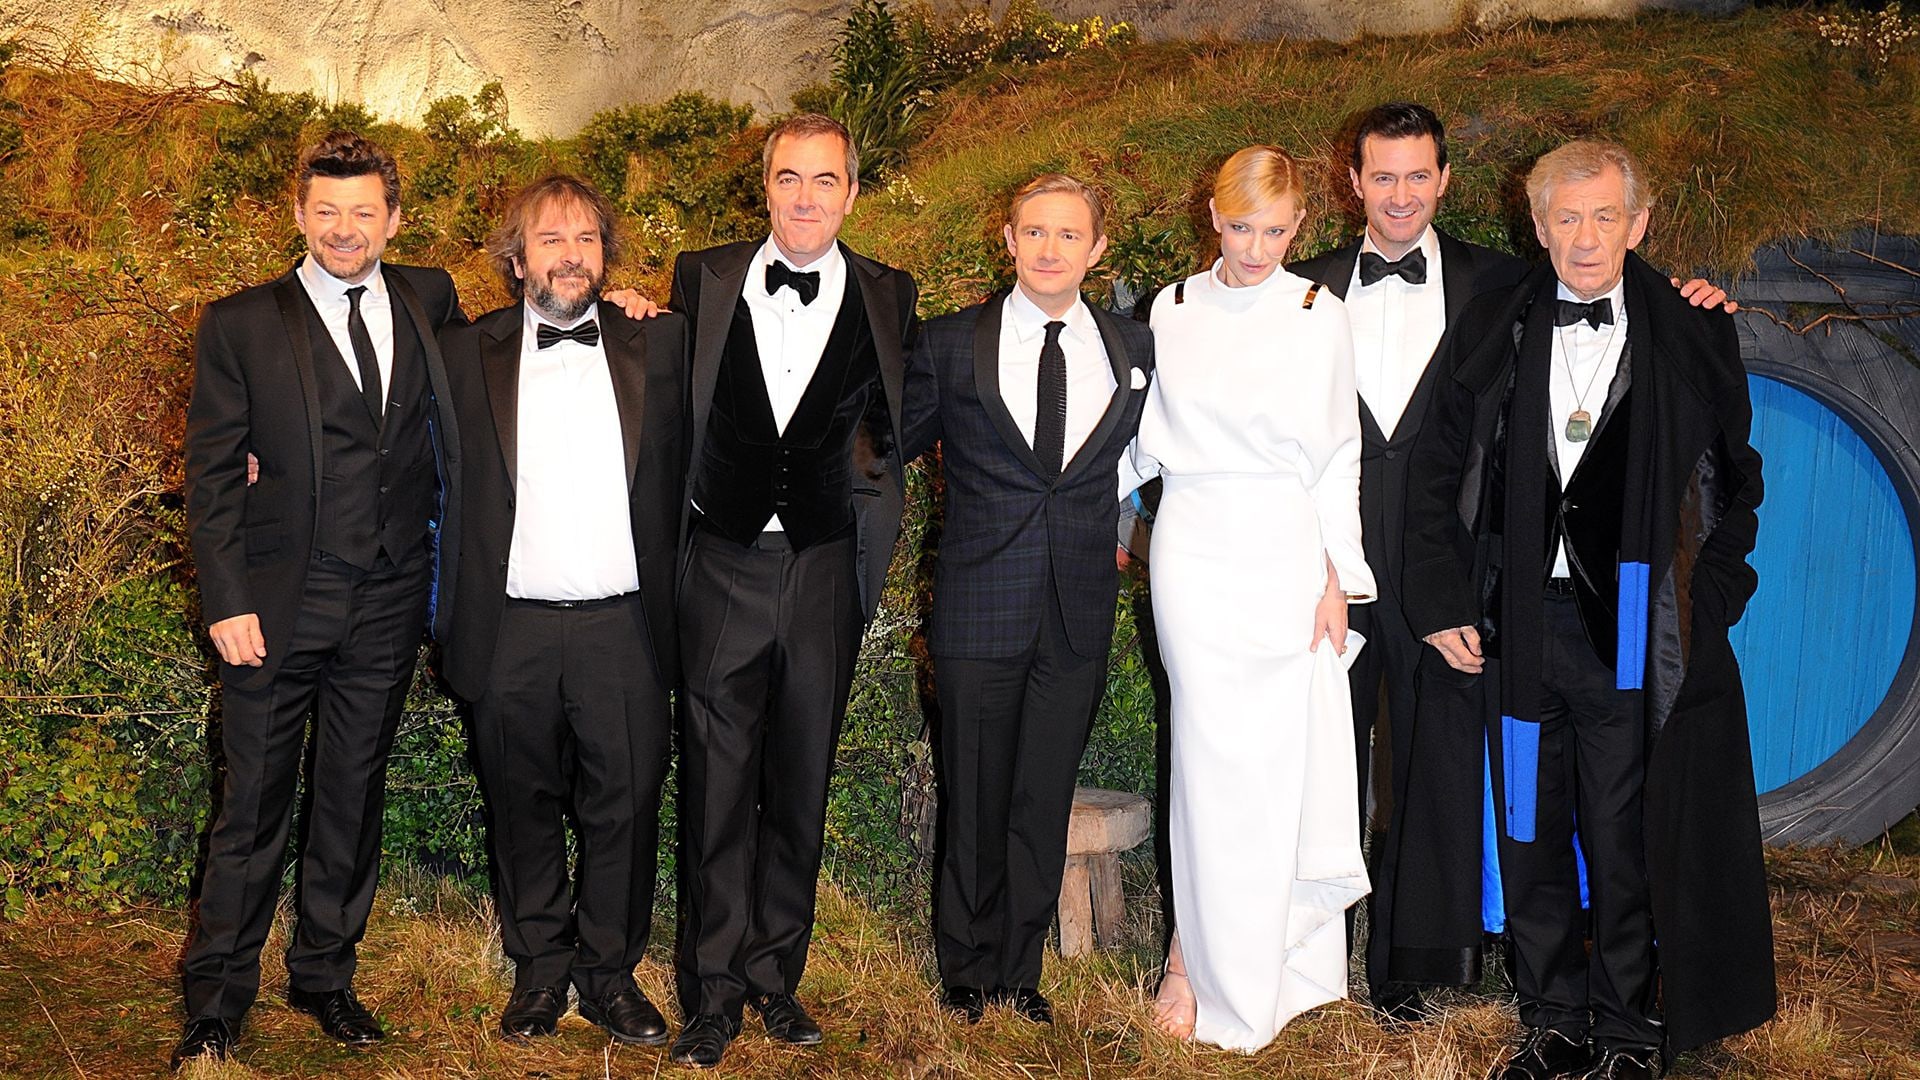 Richard Armitage, Cate Blanchett, Sir Ian McKellen, Martin Freeman, James Nesbitt, Andy Serkis and Peter Jackson at the 2012 premiere of The Hobbit